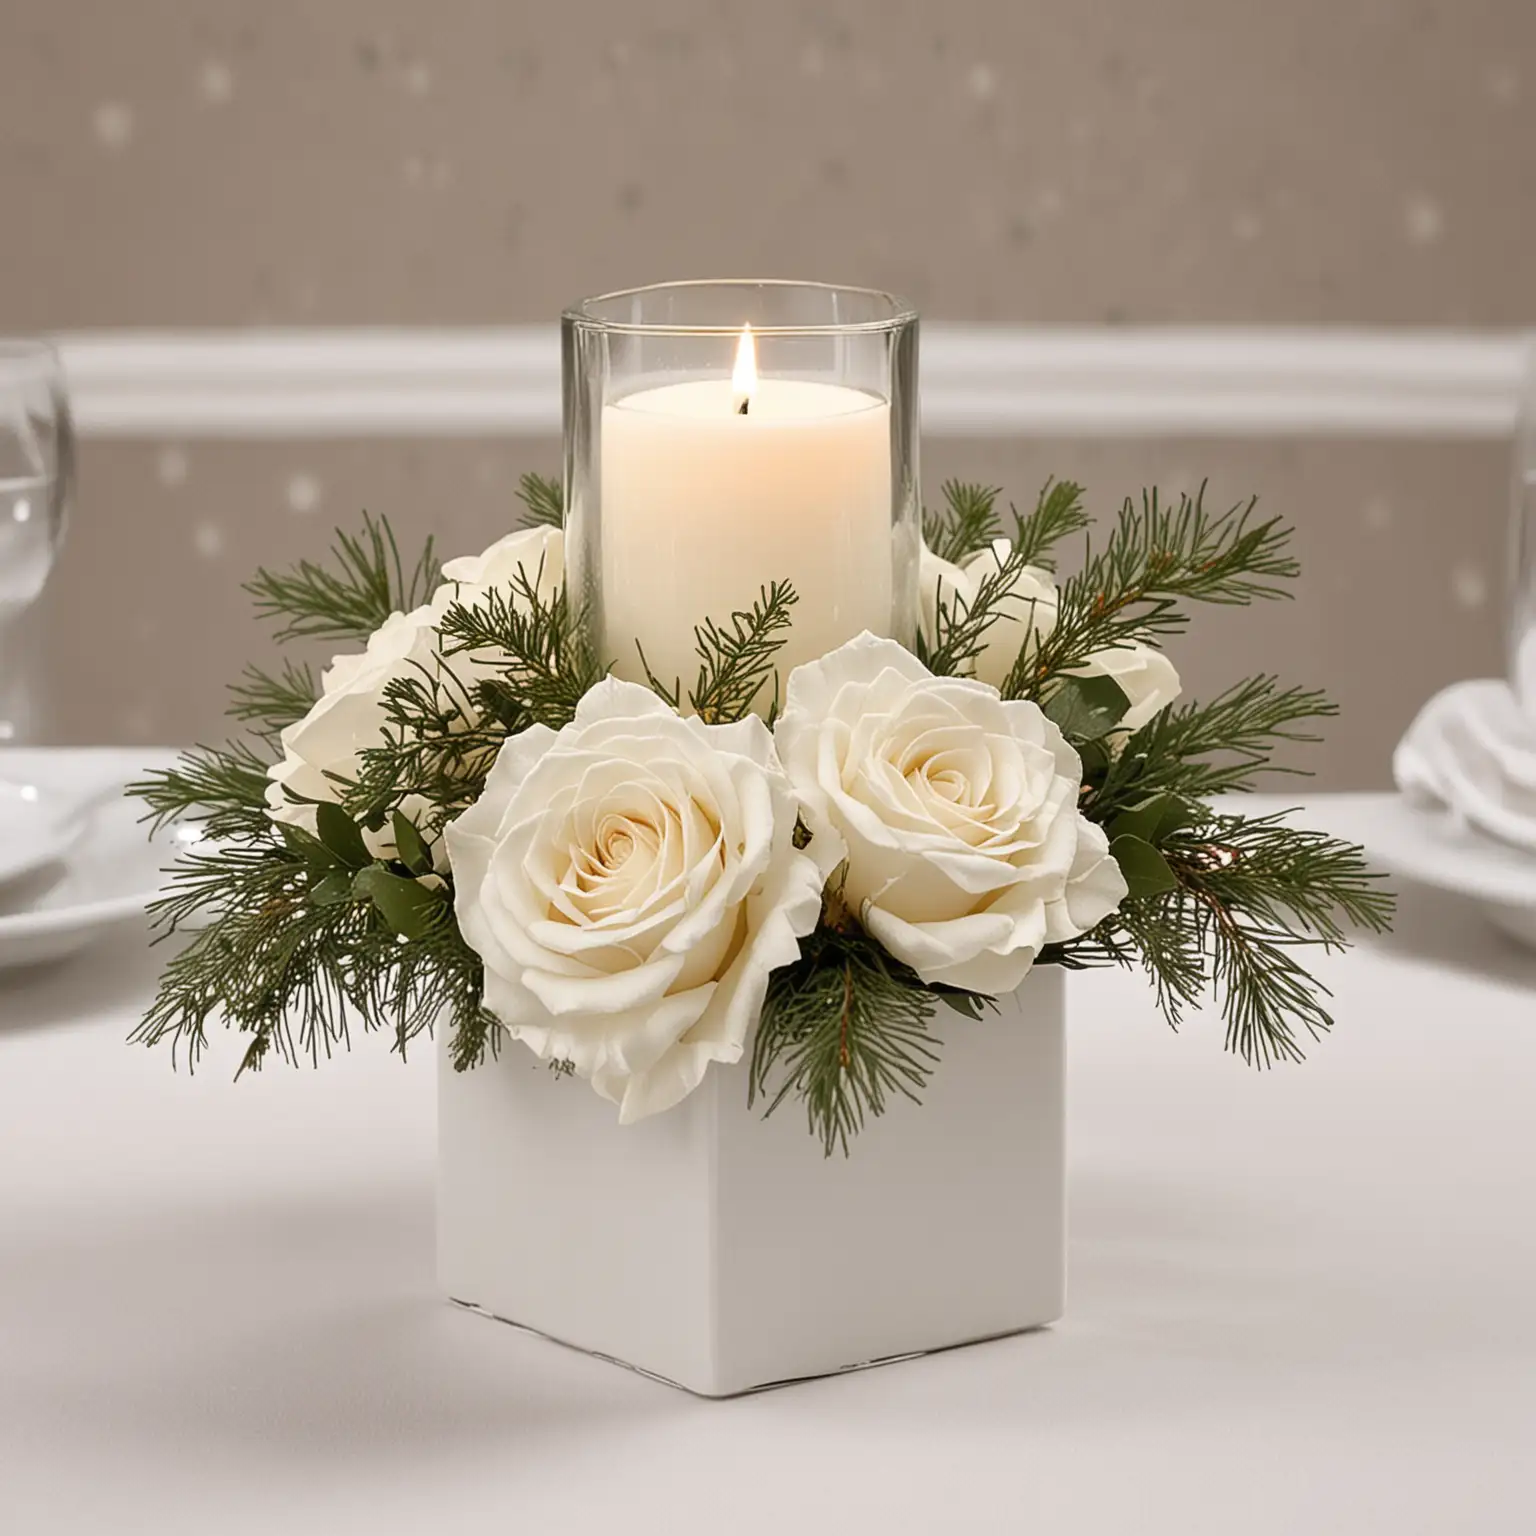 Elegant-White-Winter-Wedding-Centerpiece-Small-DIY-Decor-with-Square-Vase